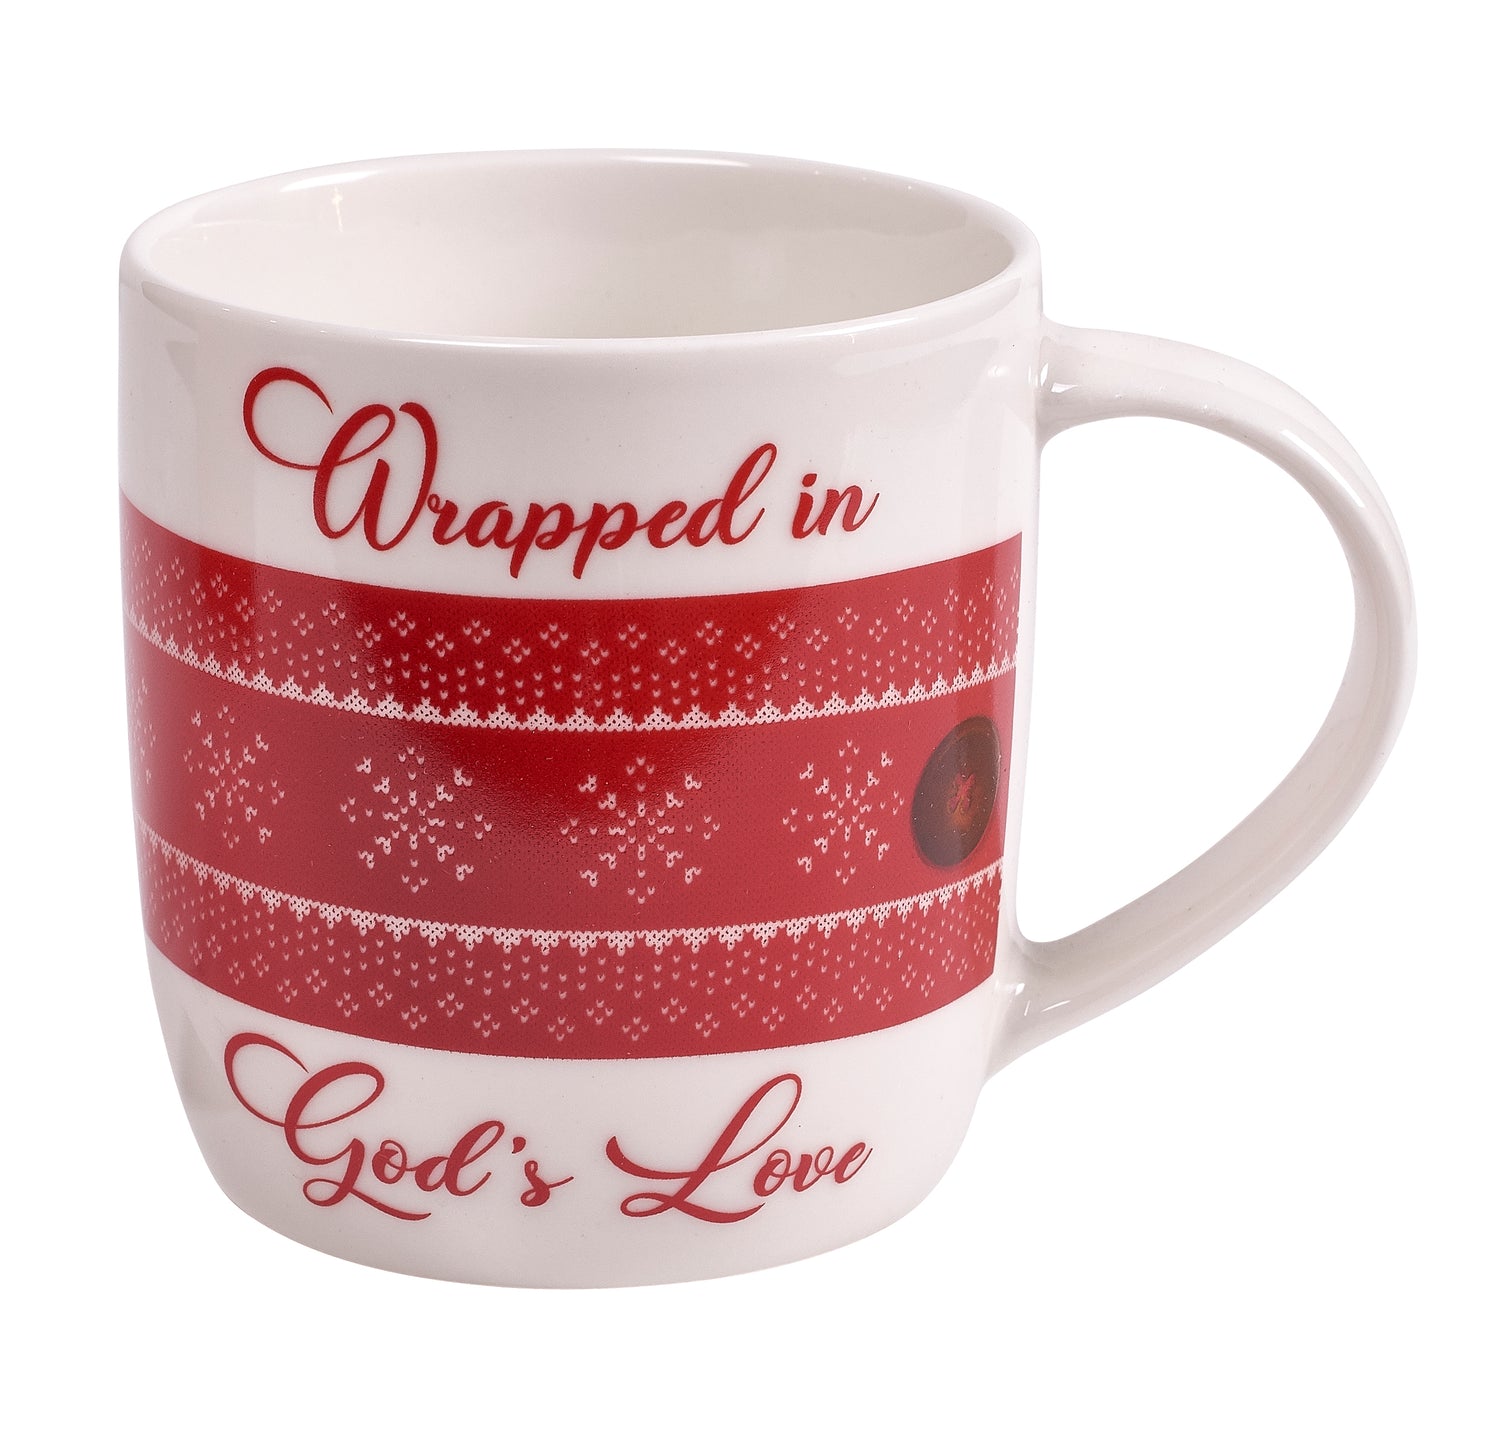 Ceramic Mug from CTA, Inc Wrapped in God's Love 